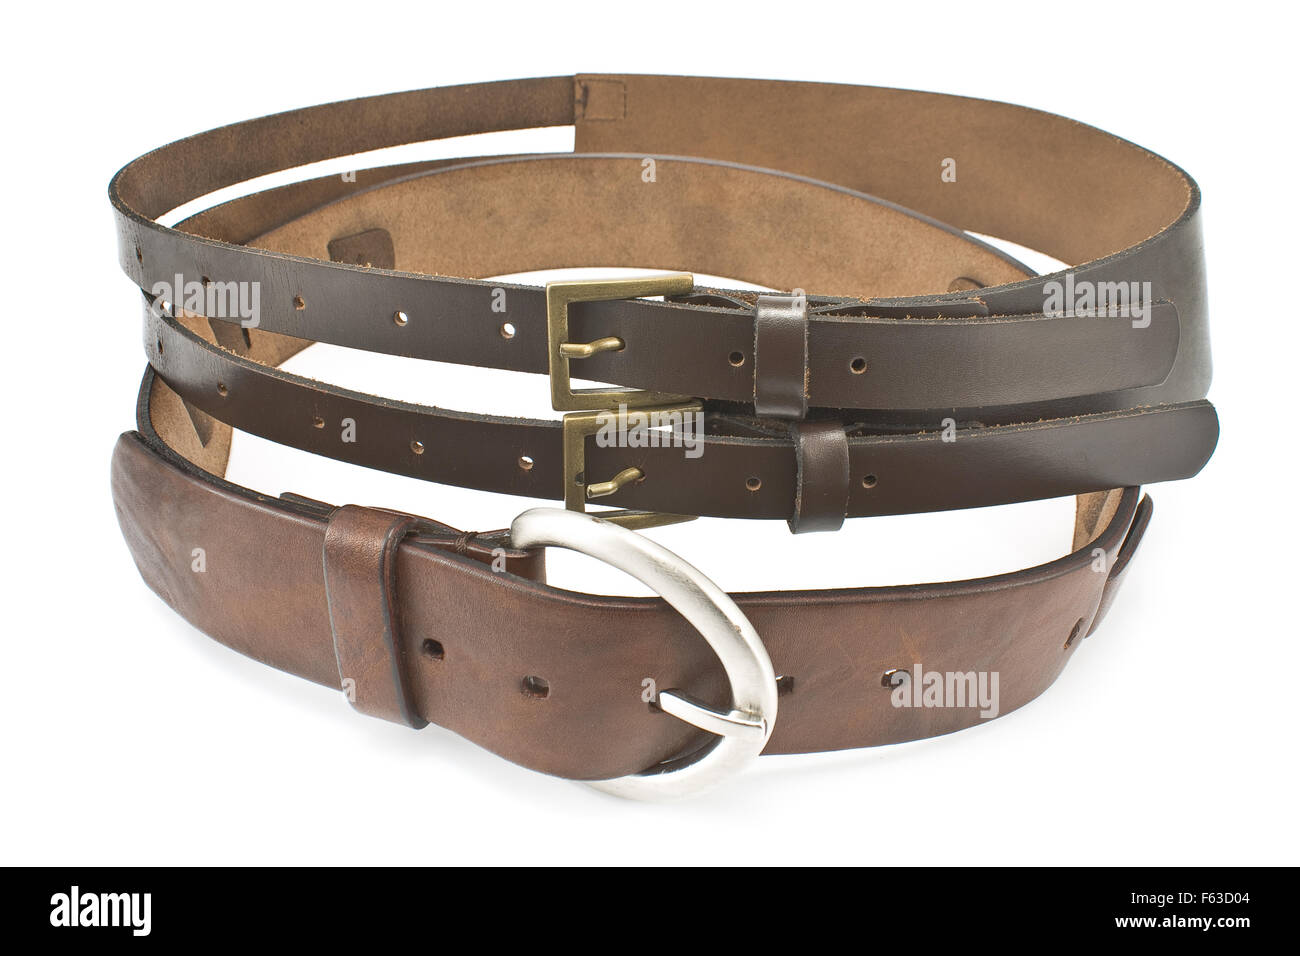 Deux ceintures en cuir isolated on white Banque D'Images